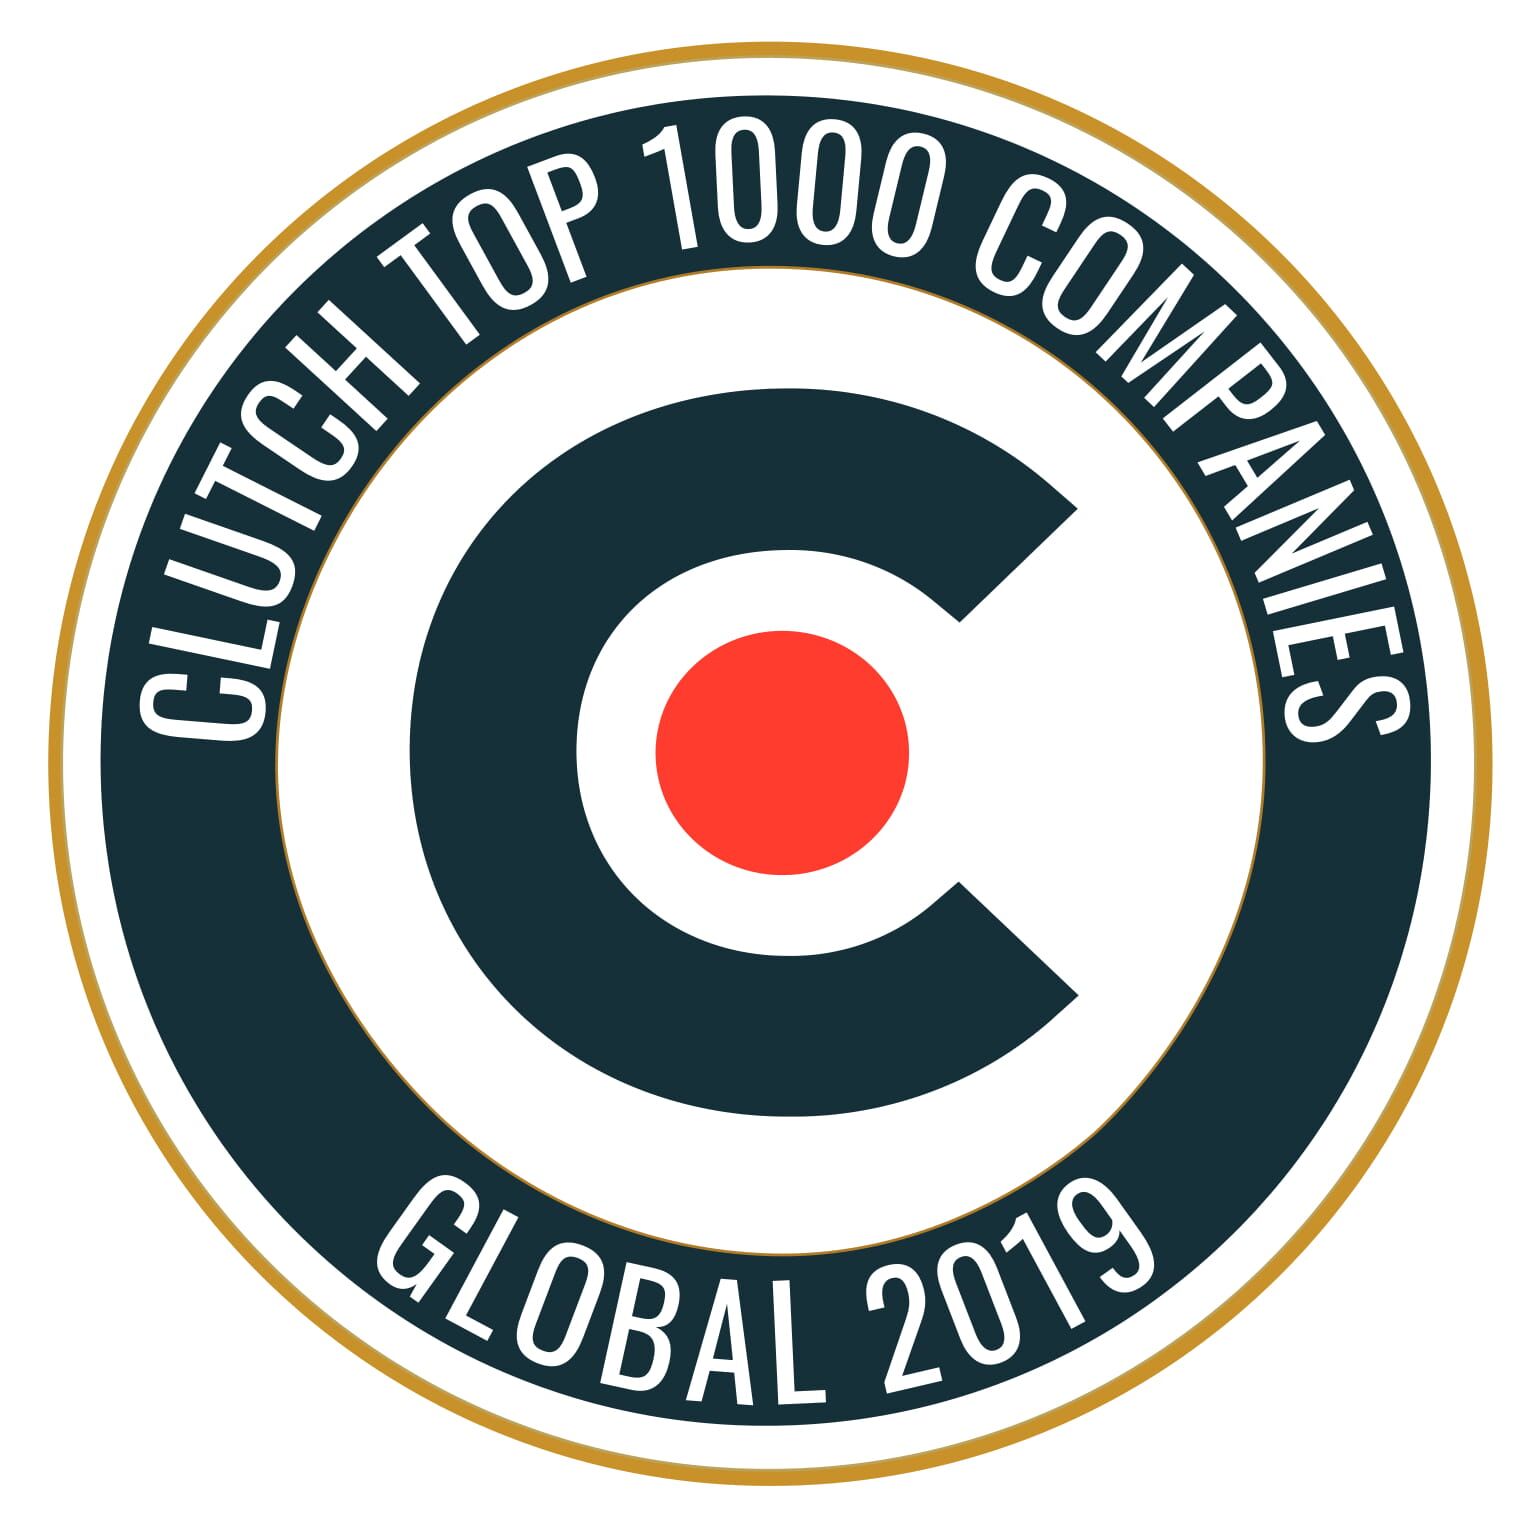 Clutch top global companies 2019 badge